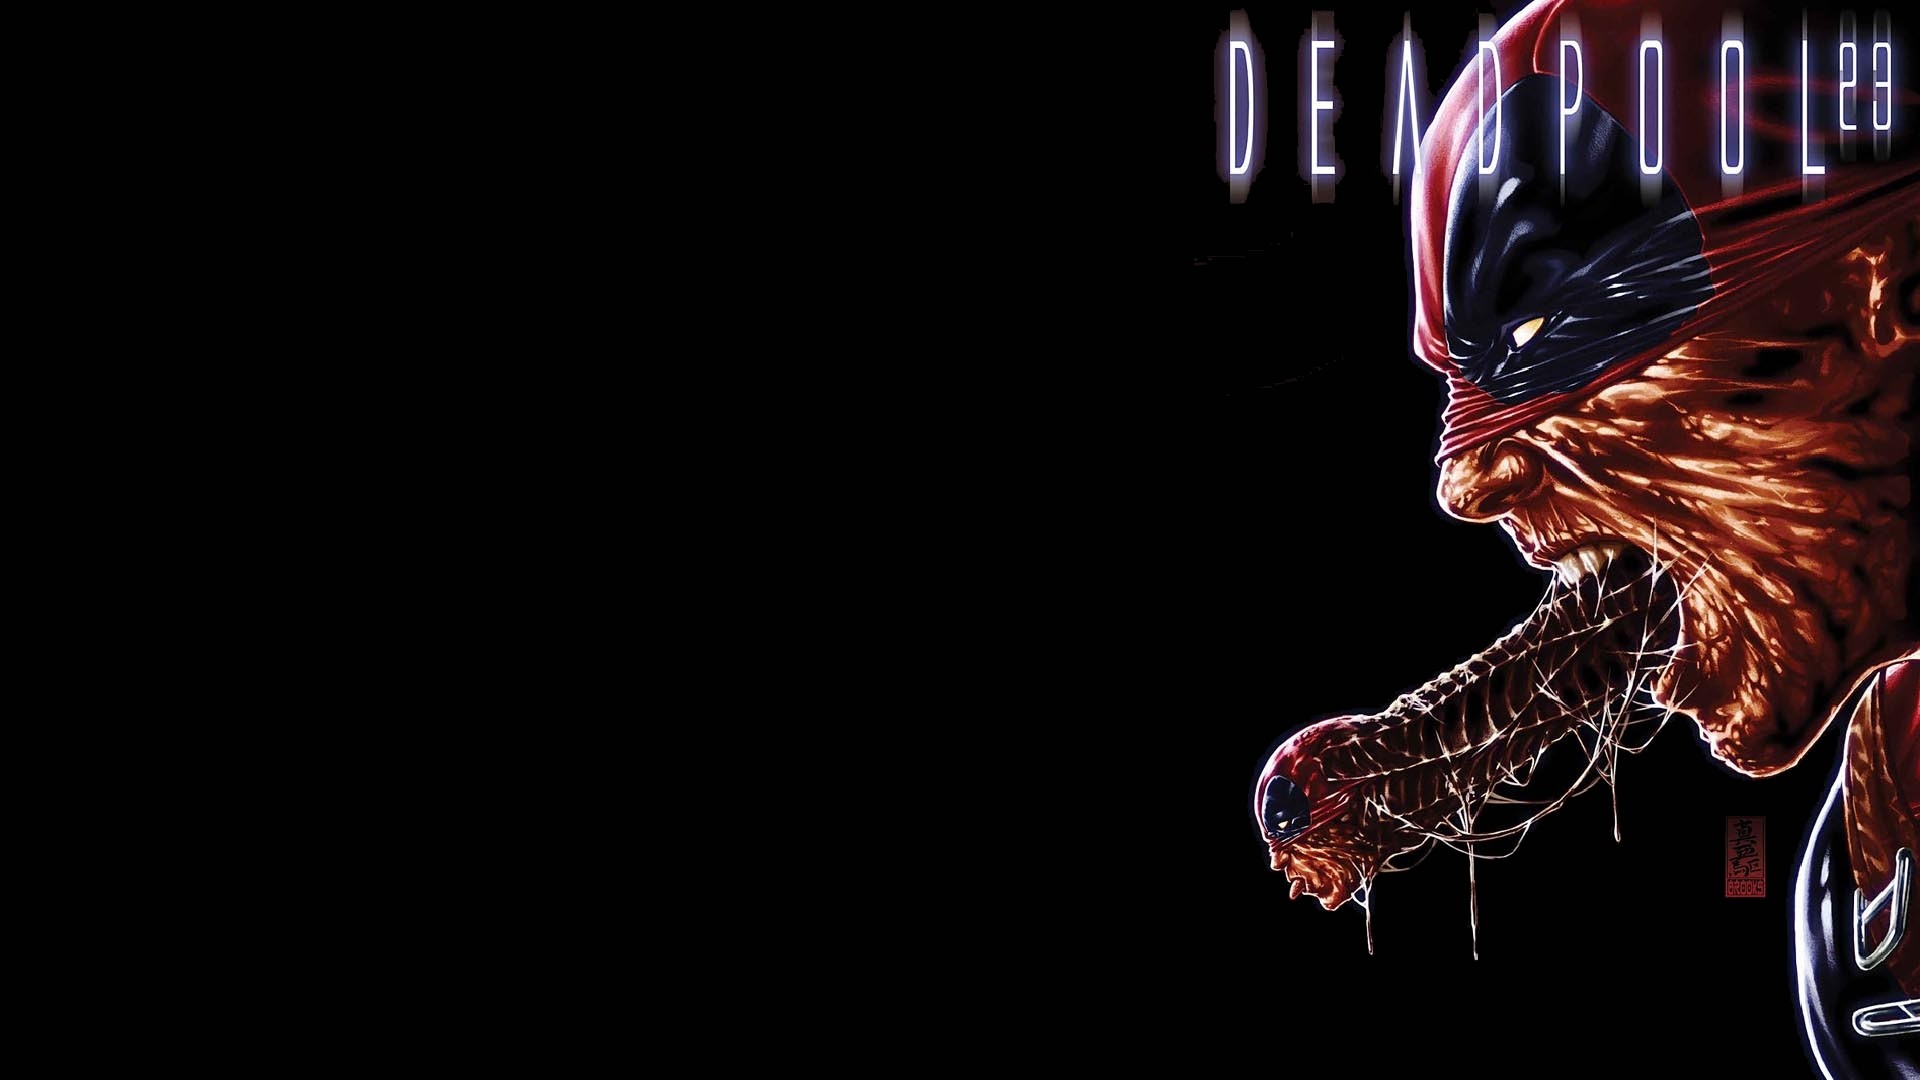 1920x1080 Deadpool HD Wallpaper | Background Image |  | ID:475720 - Wallpaper  Abyss